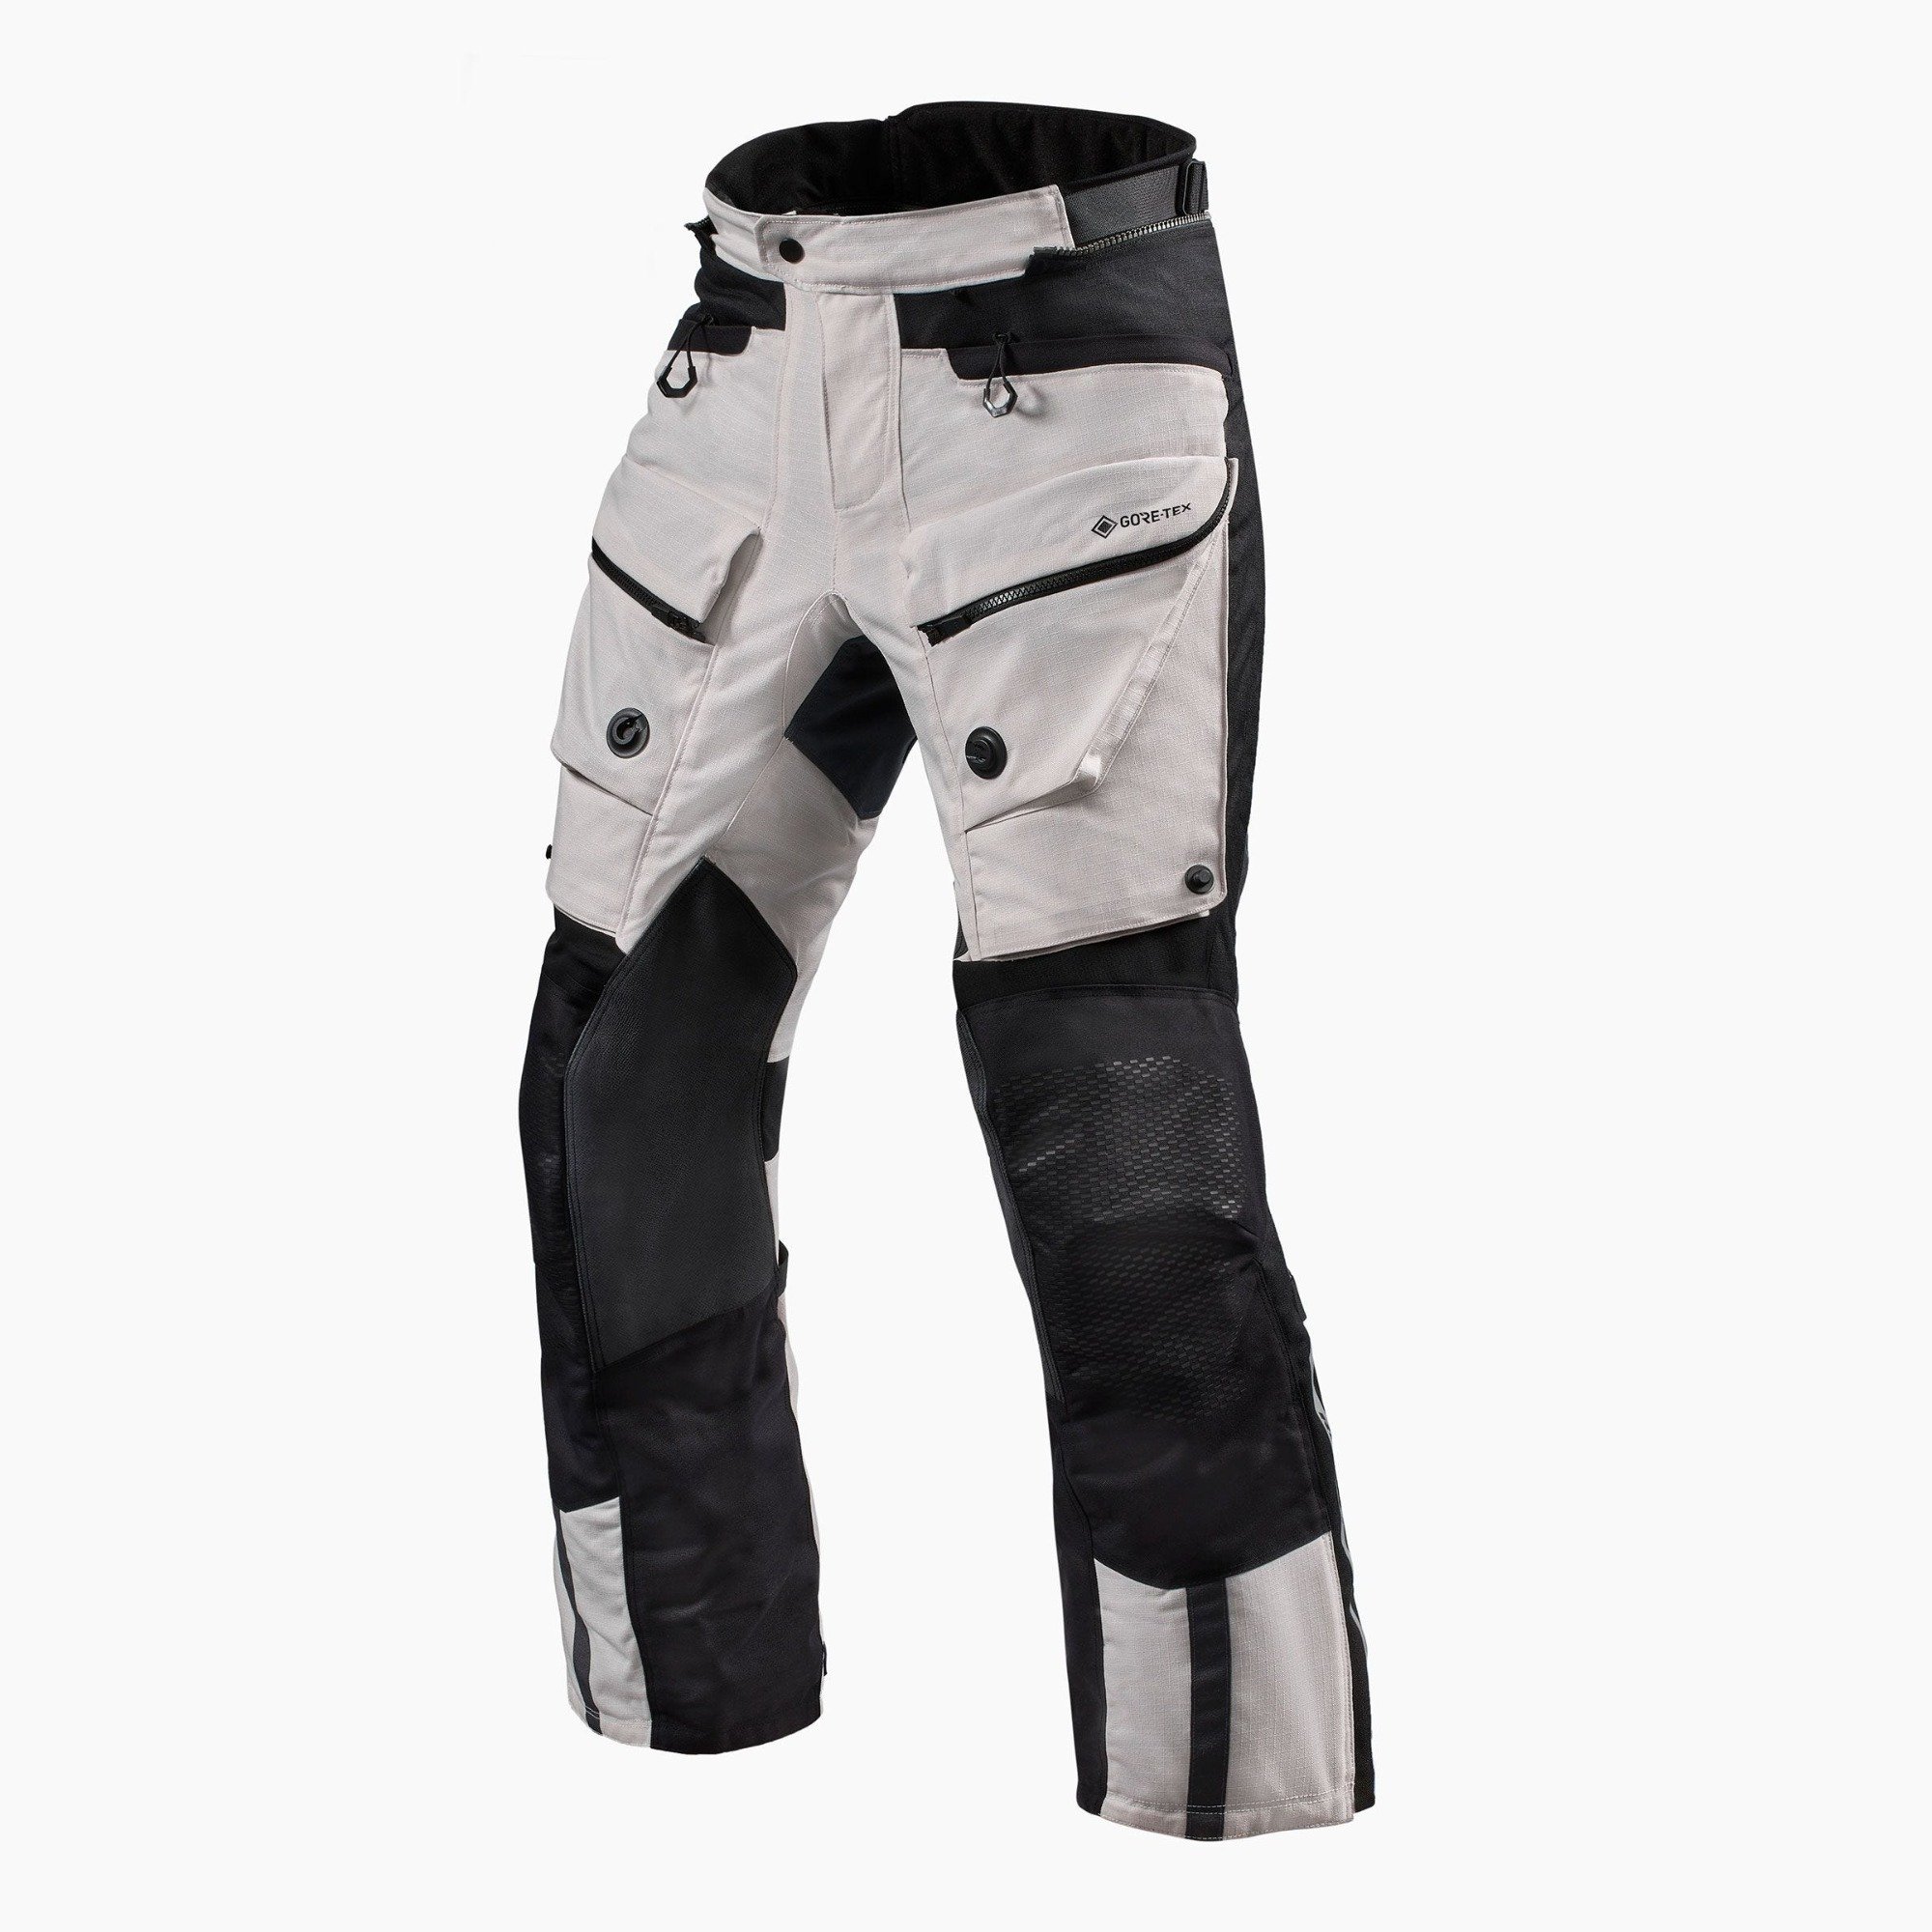 Image of REV'IT! Trousers Defender 3 GTX Silver Black Standard Motorcycle Pants Size L EN